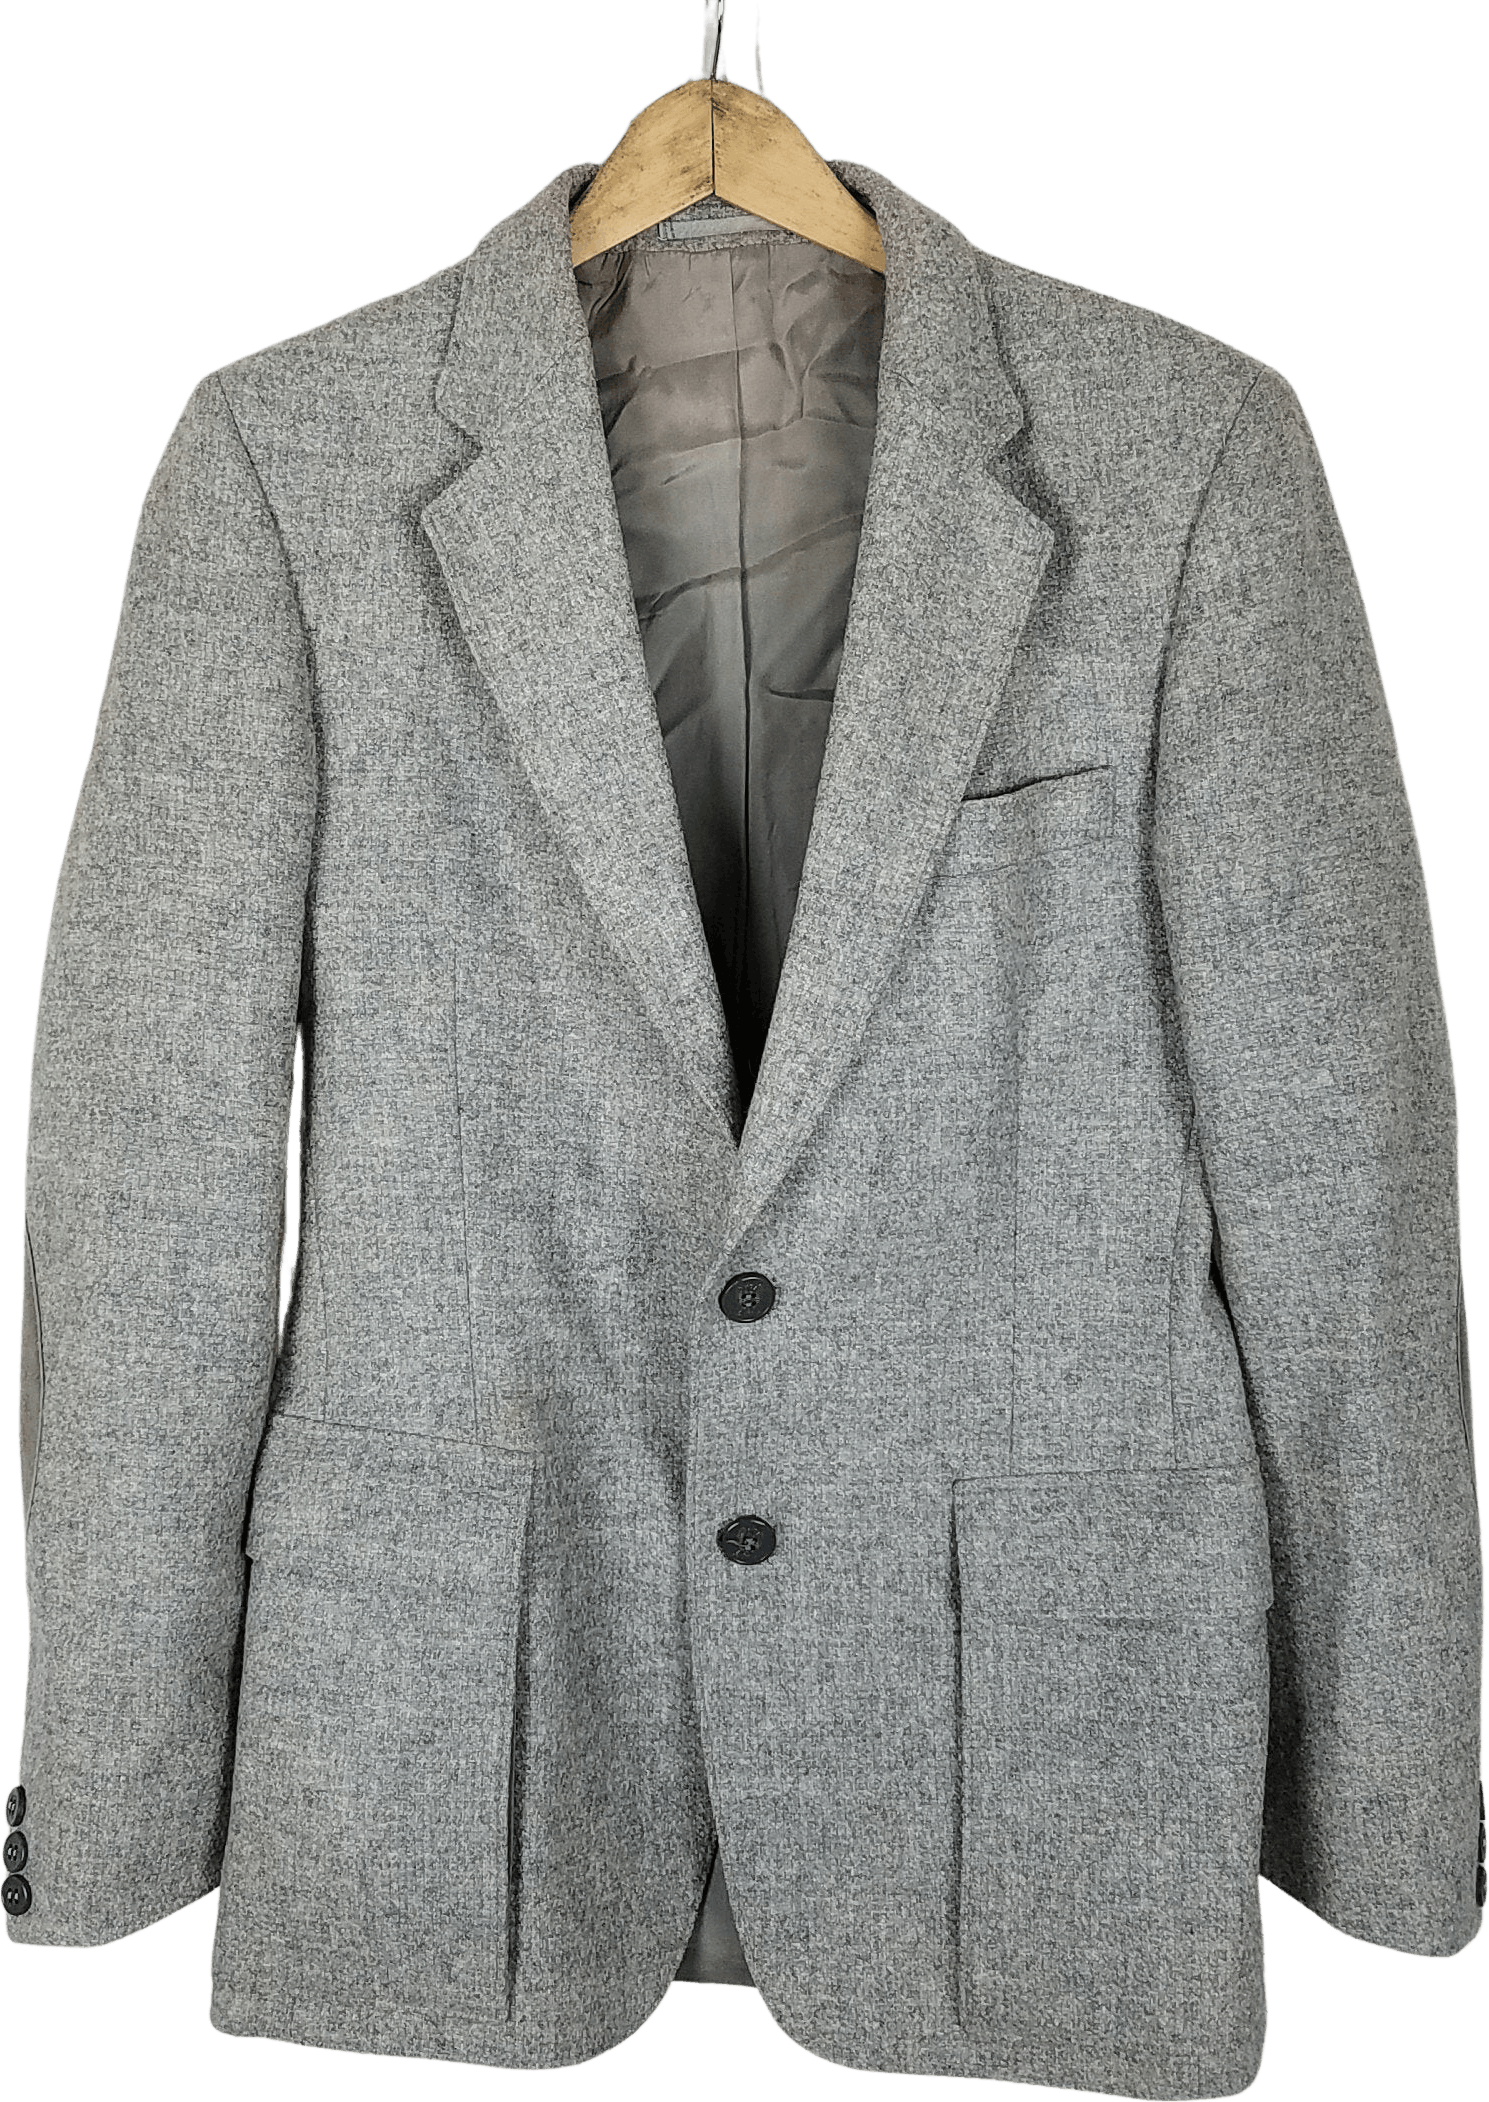 Vintage Gray Wool Tweed Blazer by Members Only by Europe Craft | Shop ...